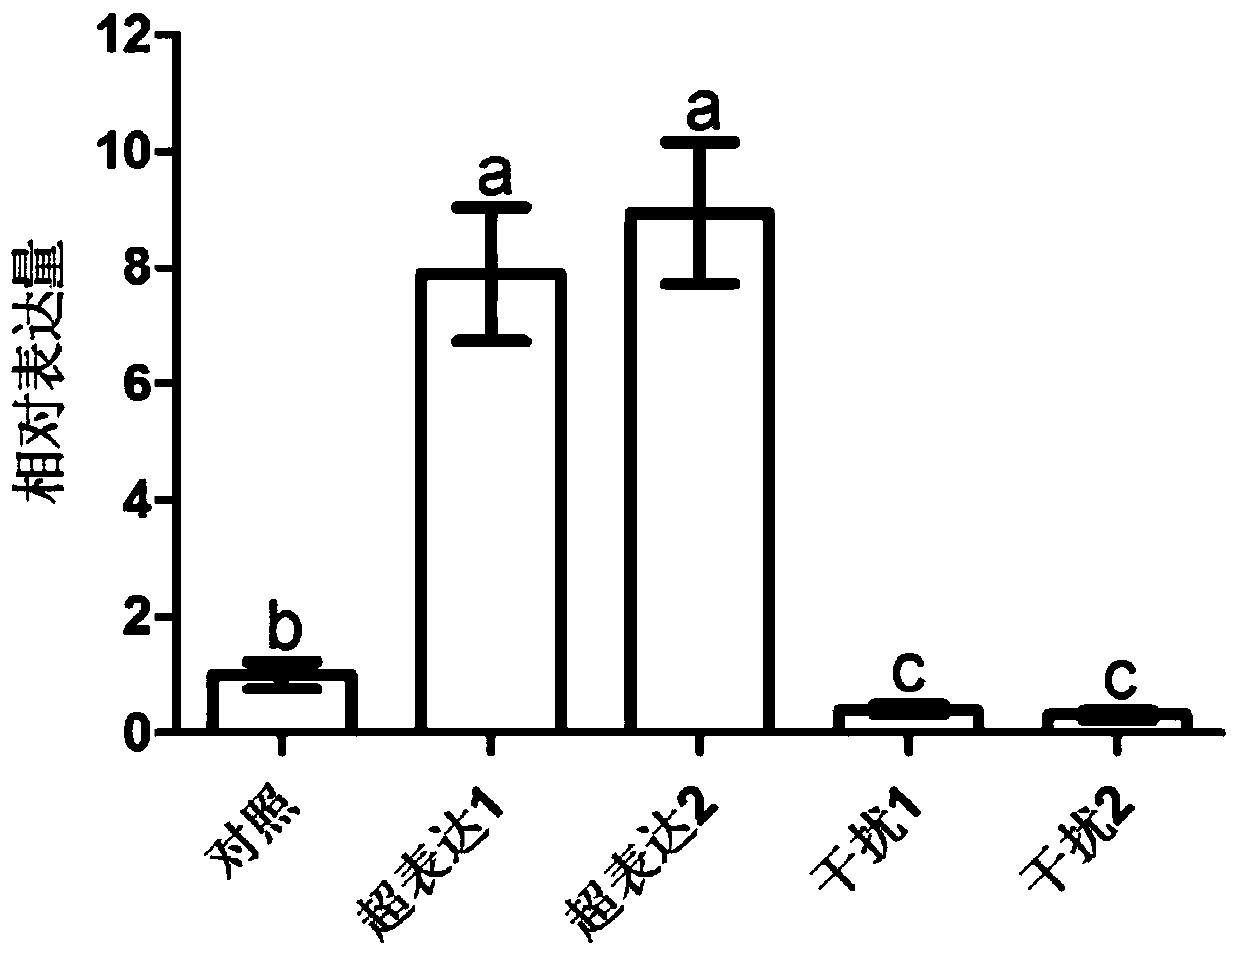 Application of Nitrogen Transport Gene osnpf8.1 in Improving Rice Tiller Number